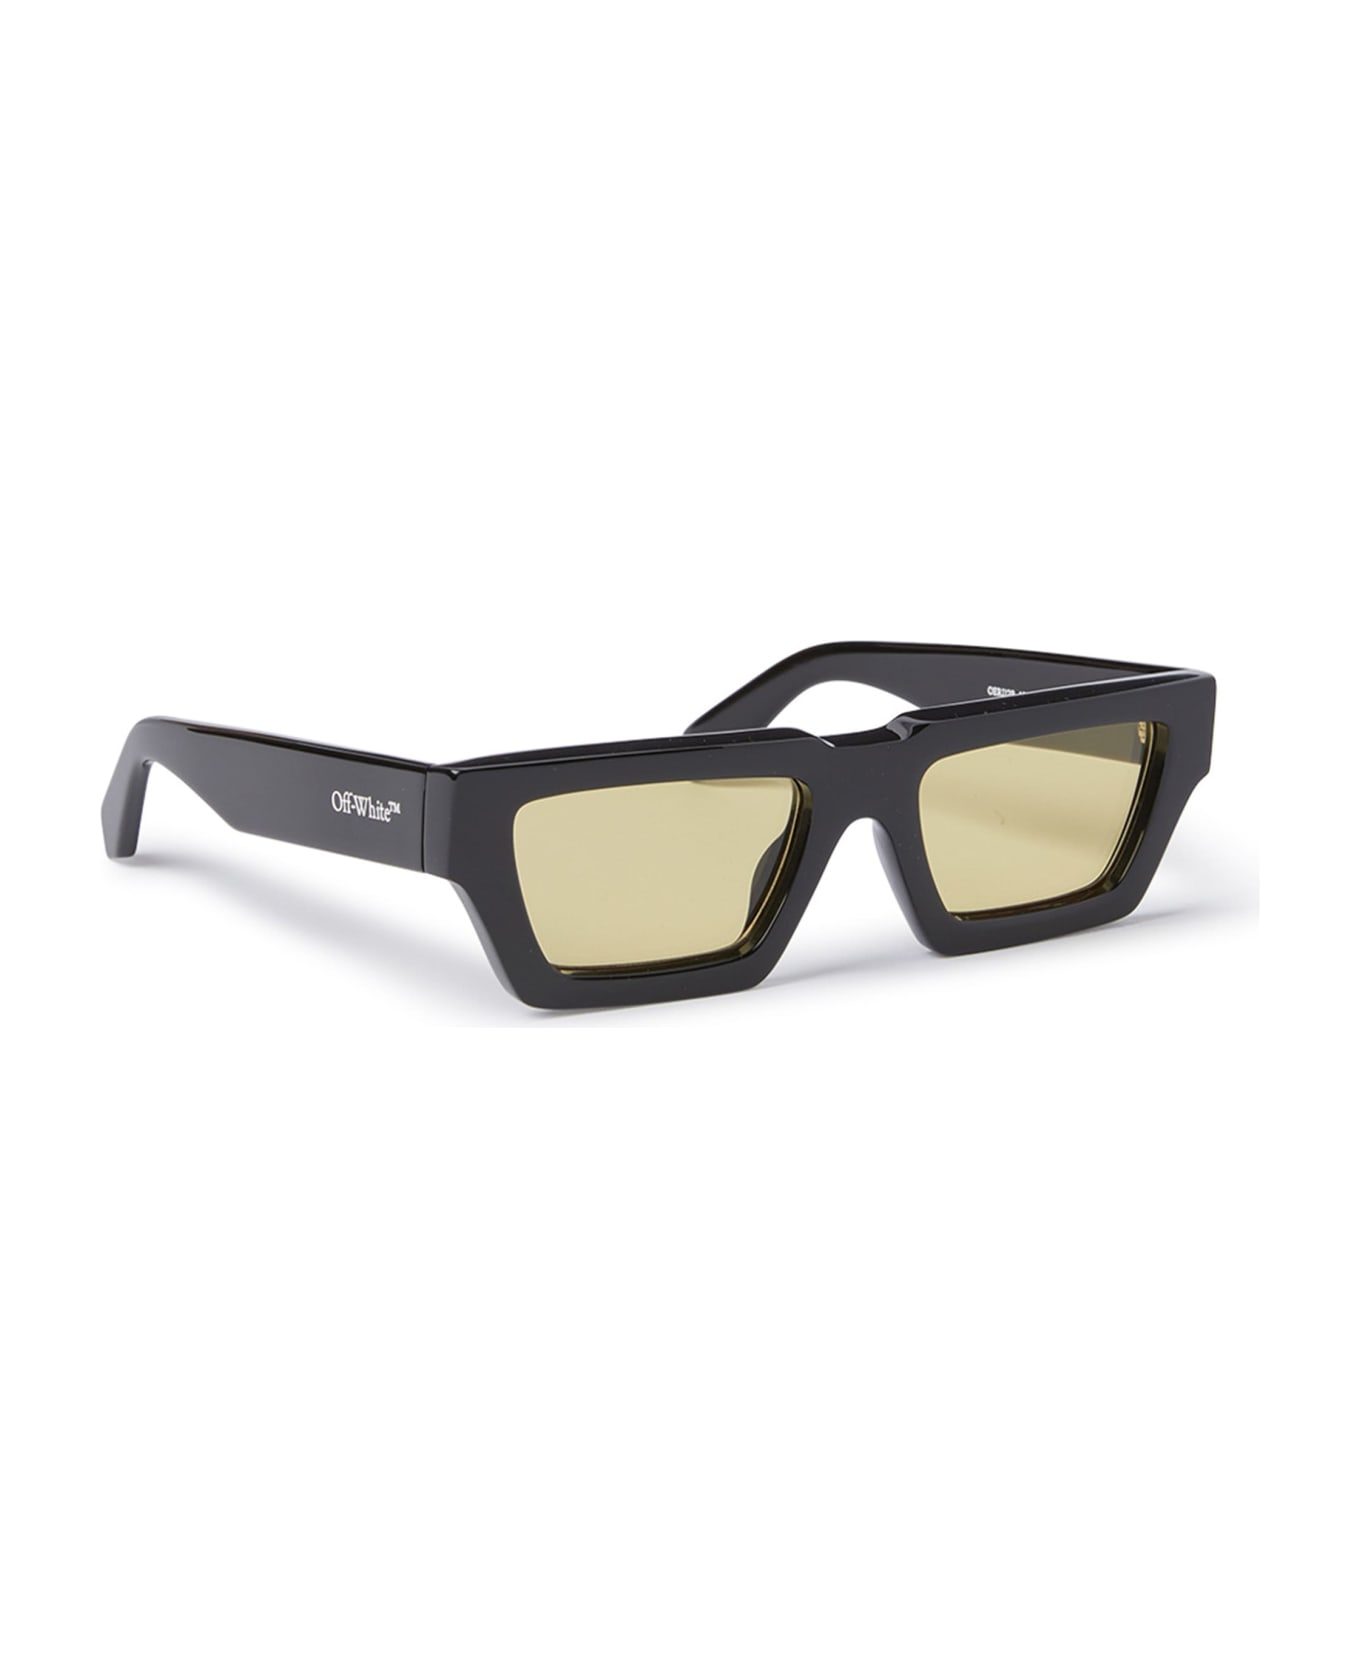 Off-White Manchester - Black / Yellow Sunglasses - Black サングラス